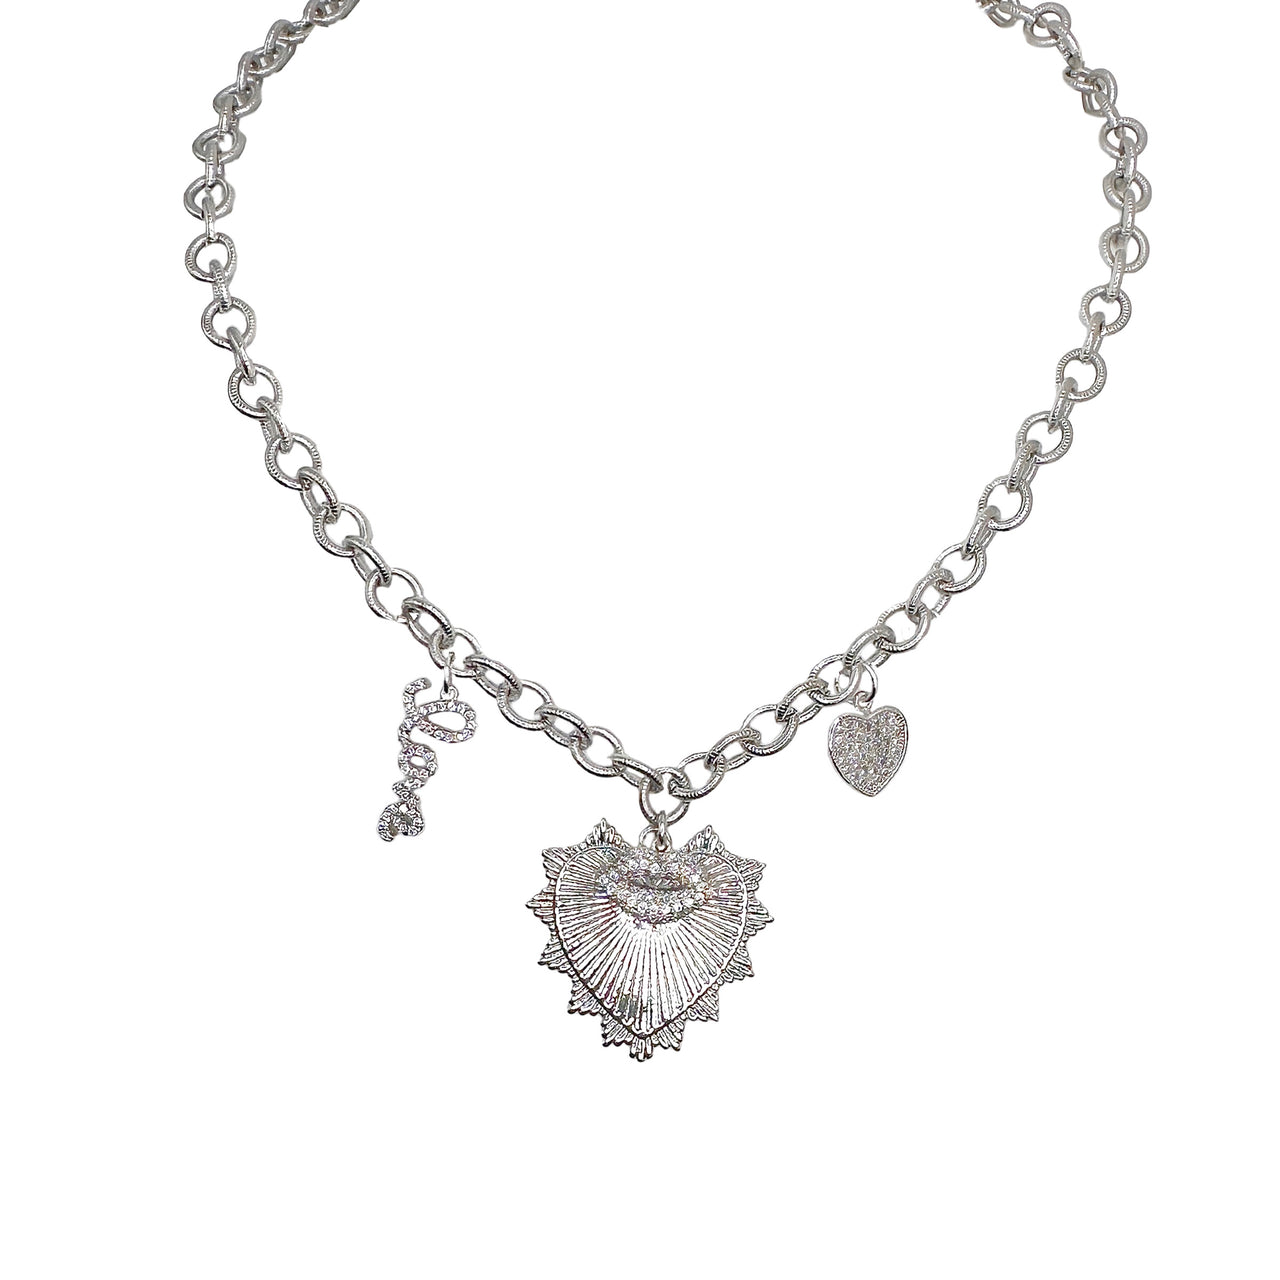 Lisa Love & Kisses Necklace